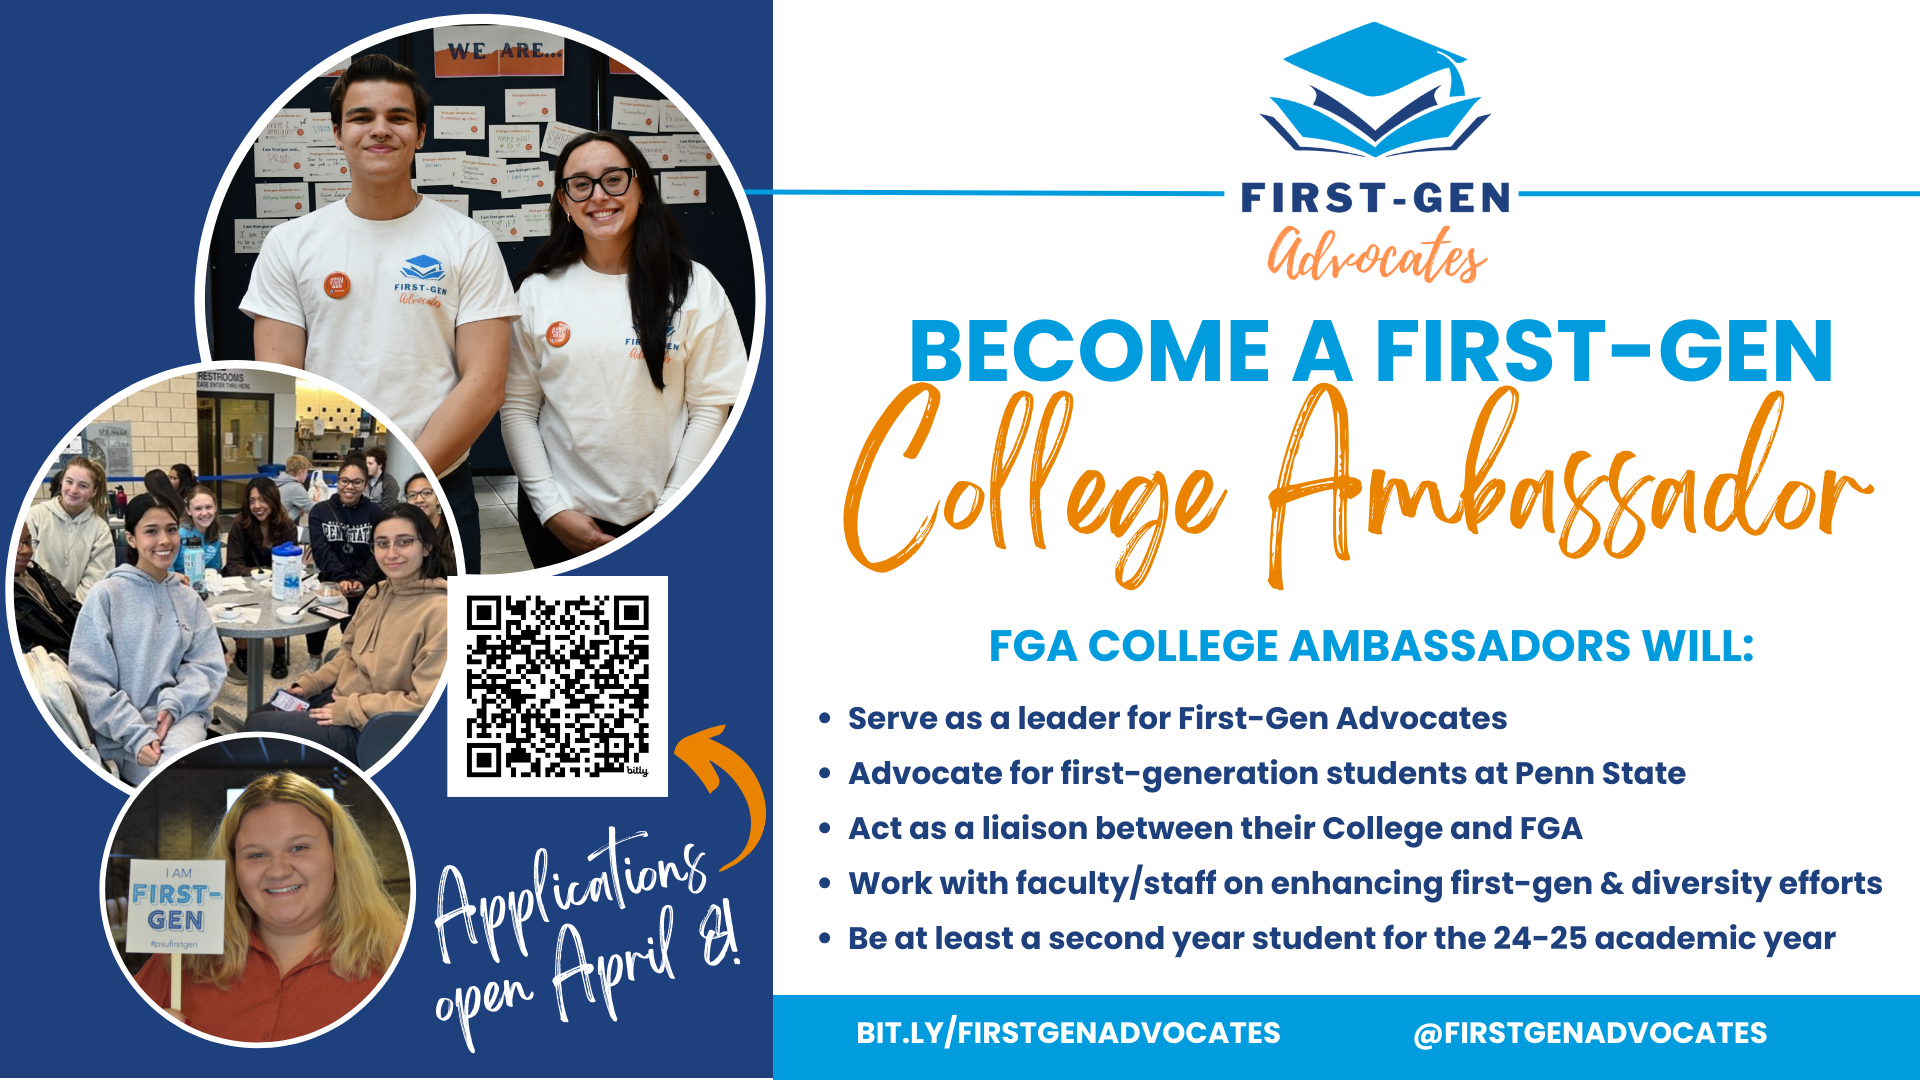 College ambassador's leadership program with First-Gen Advocates student organization